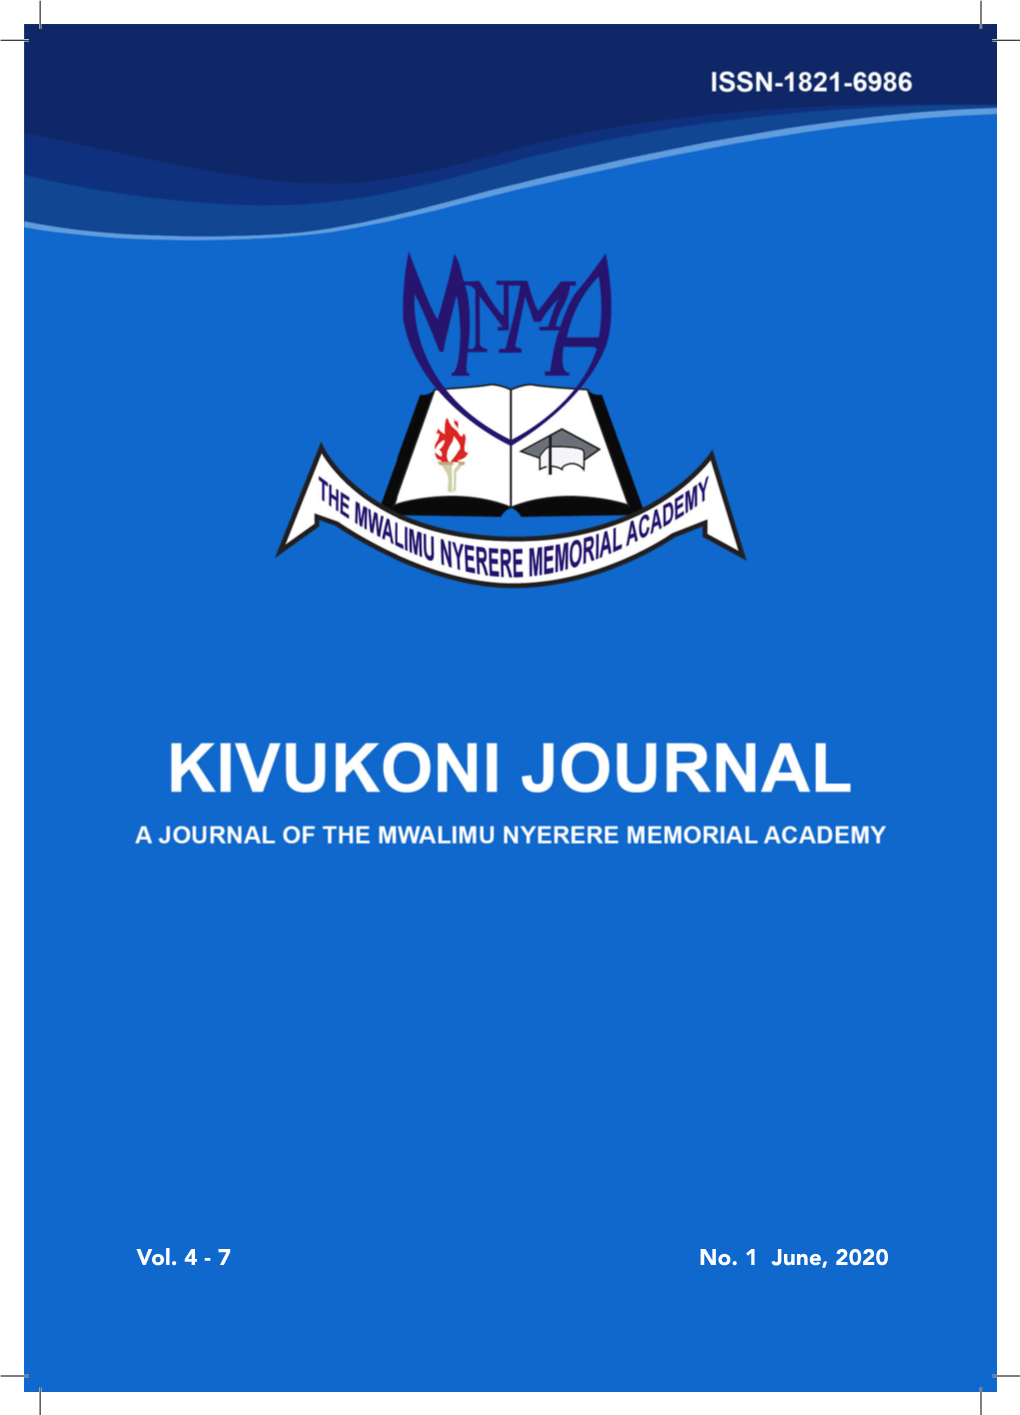 KIVUKONI JOURNAL a Journal of the Mwalimu Nyerere Memorial Academy